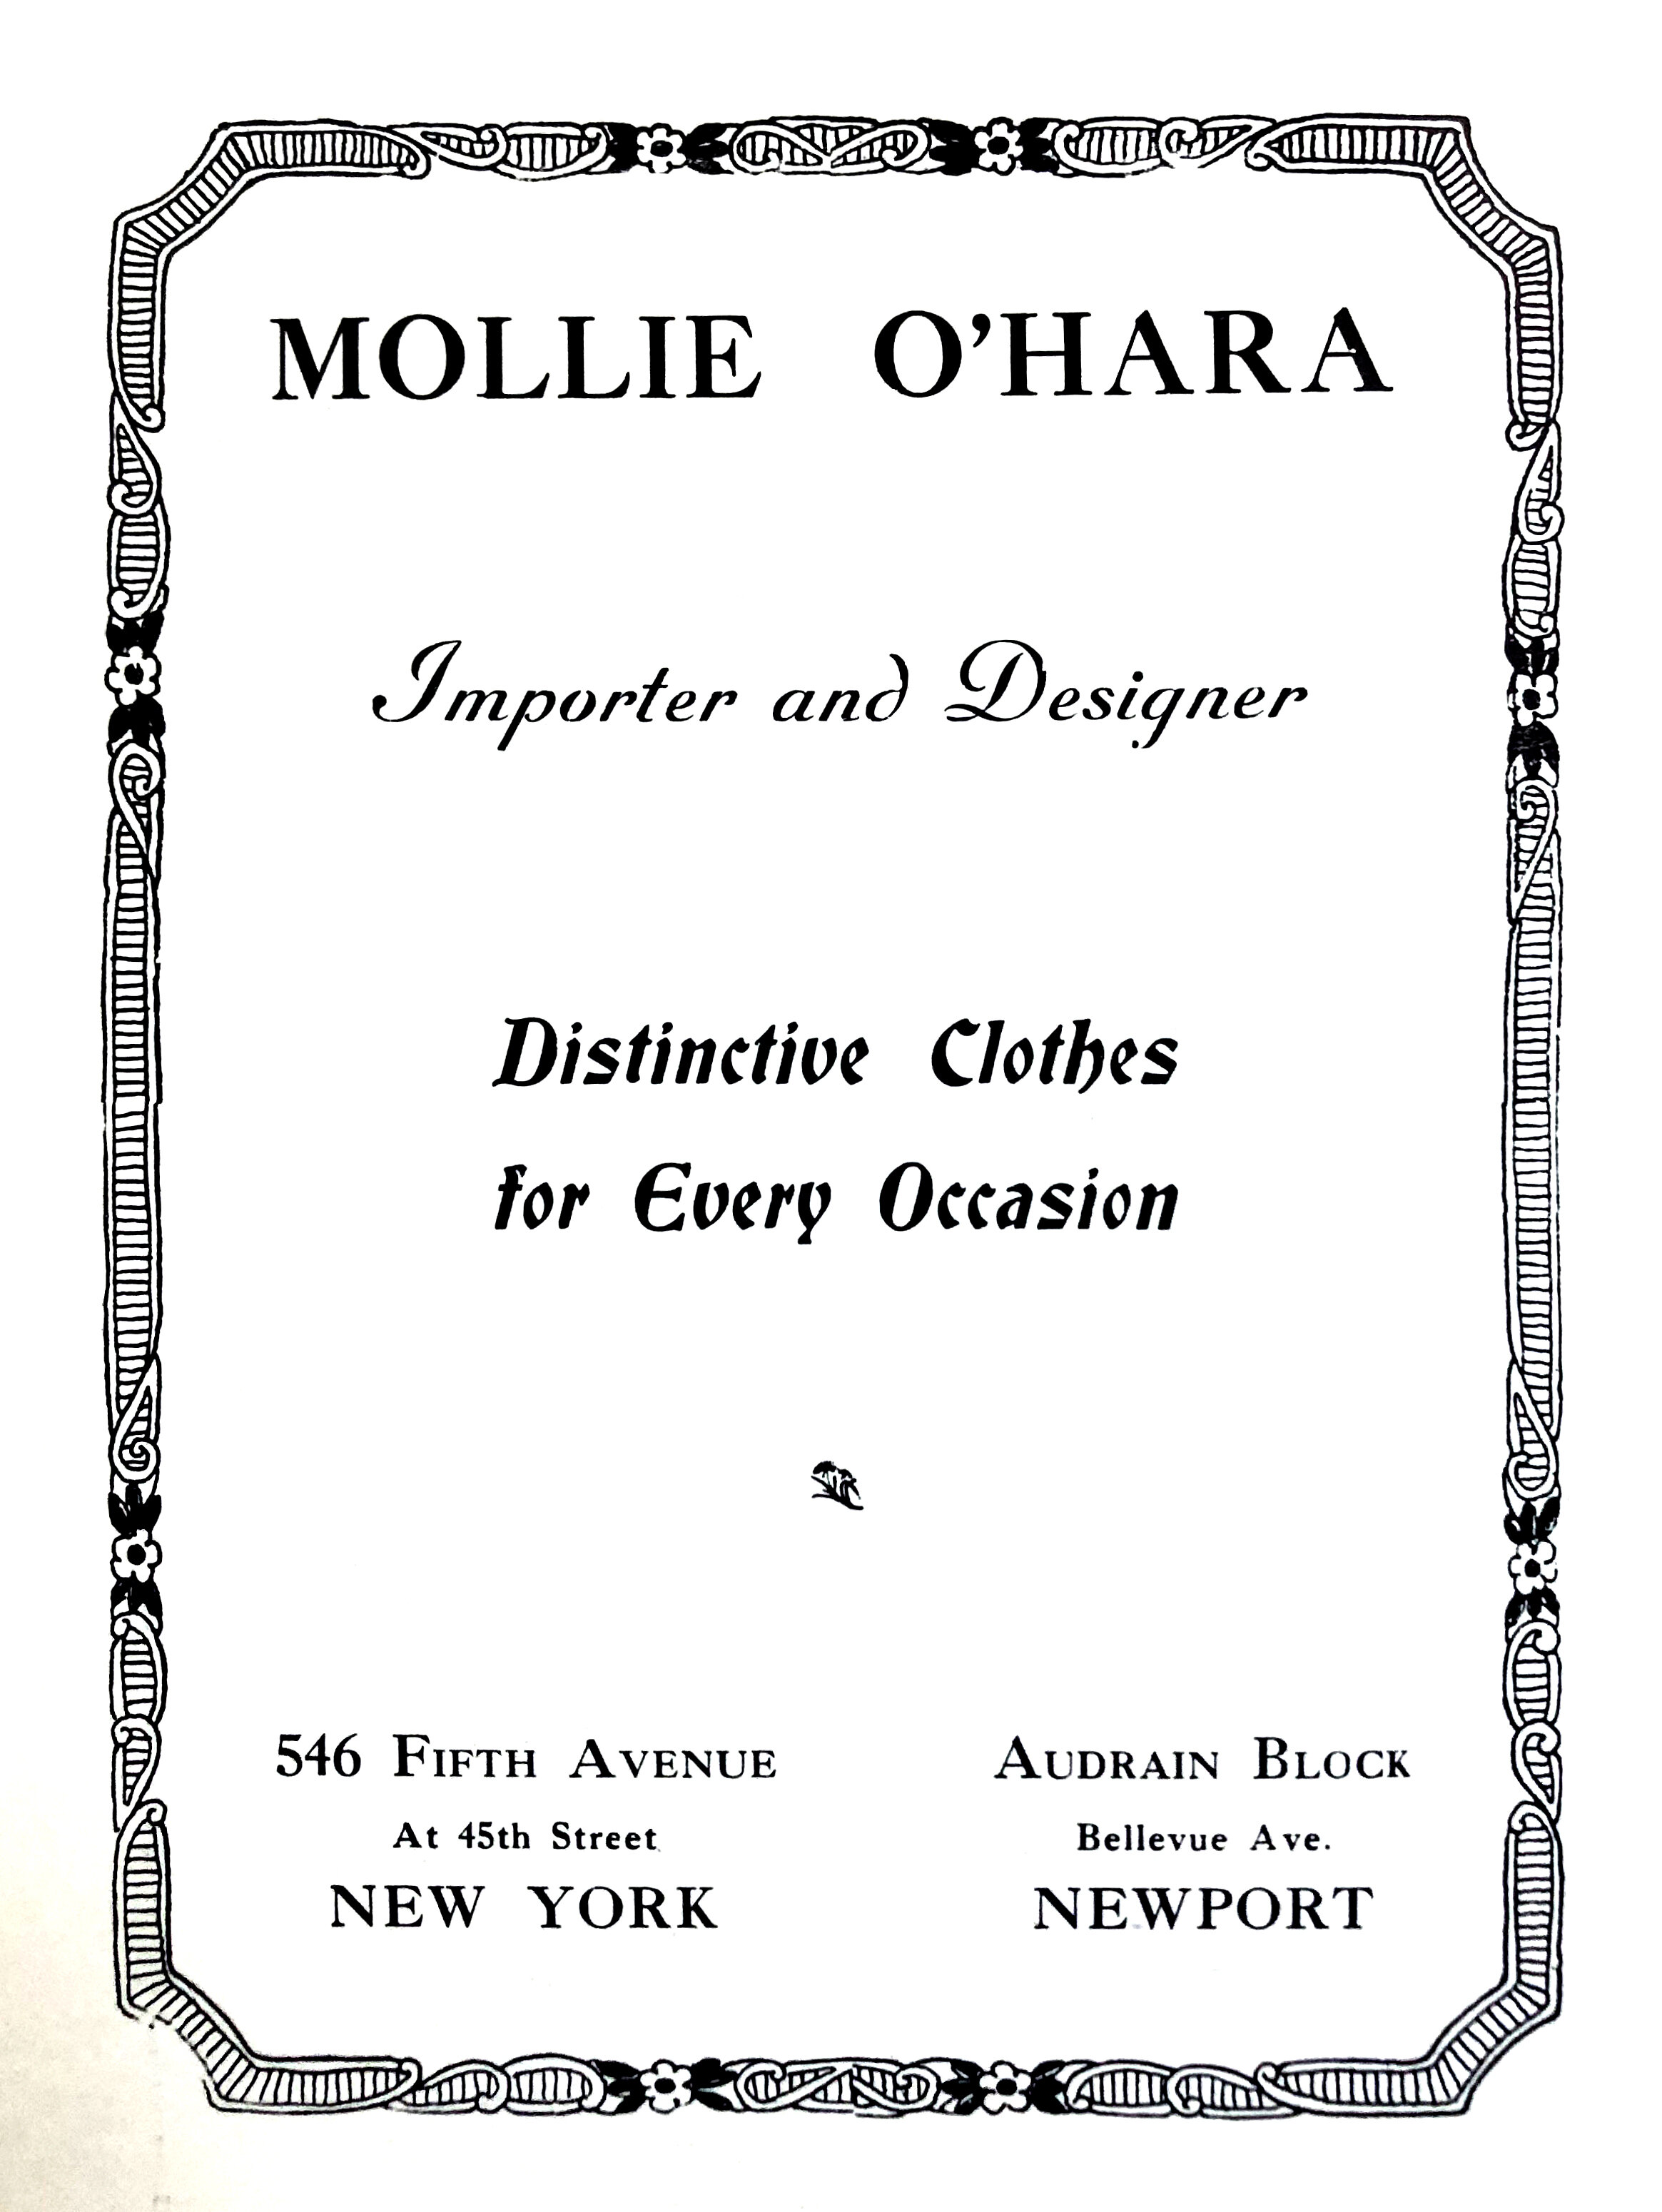 Mollie ad, 1924 social index.jpg